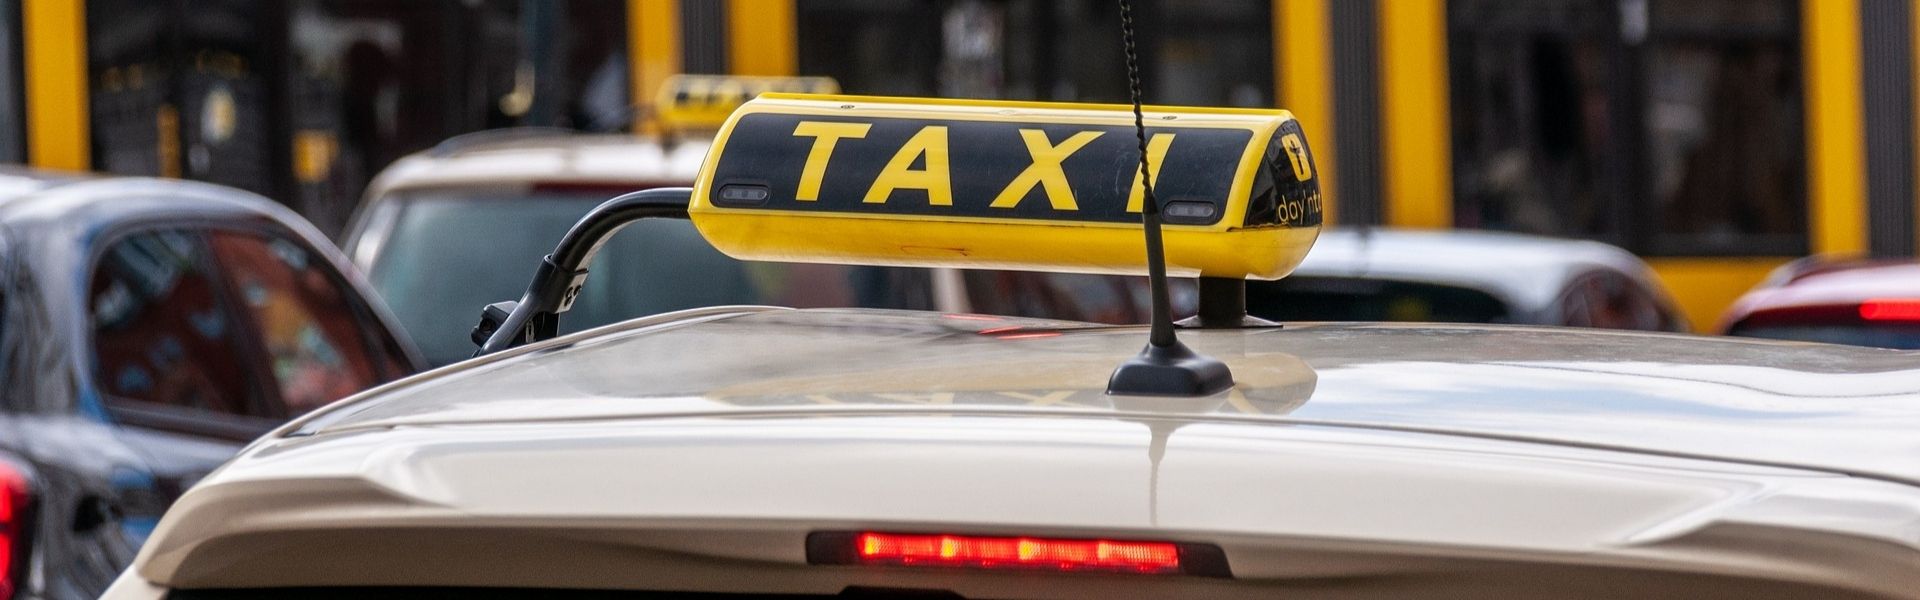 Taxi-Fahrzeugdach